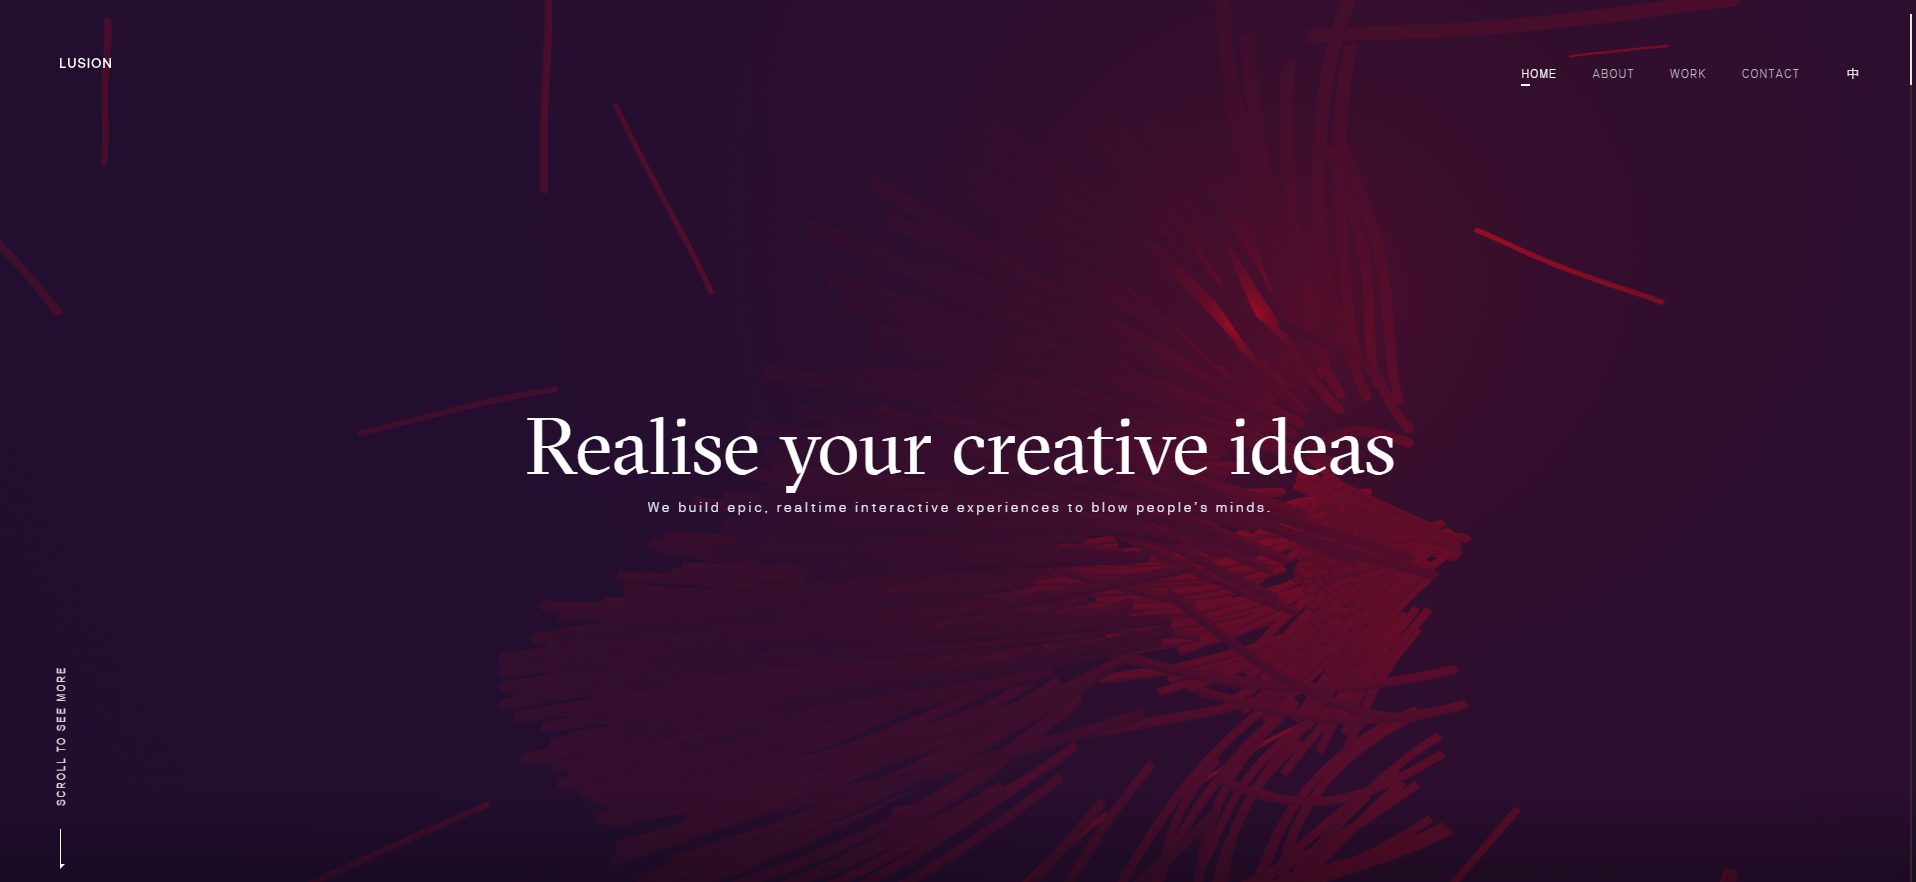 Realise your creative ideas